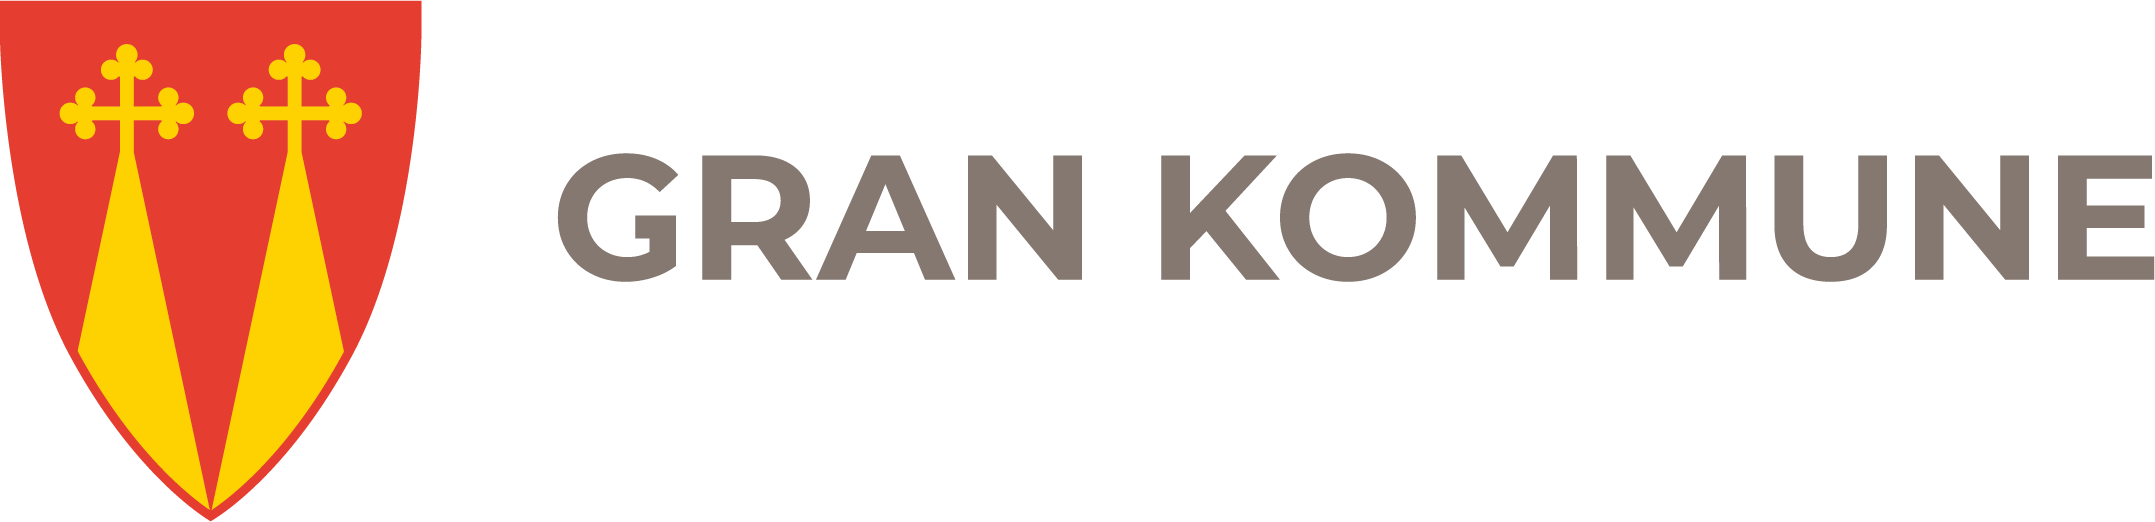 Gran kommune logo